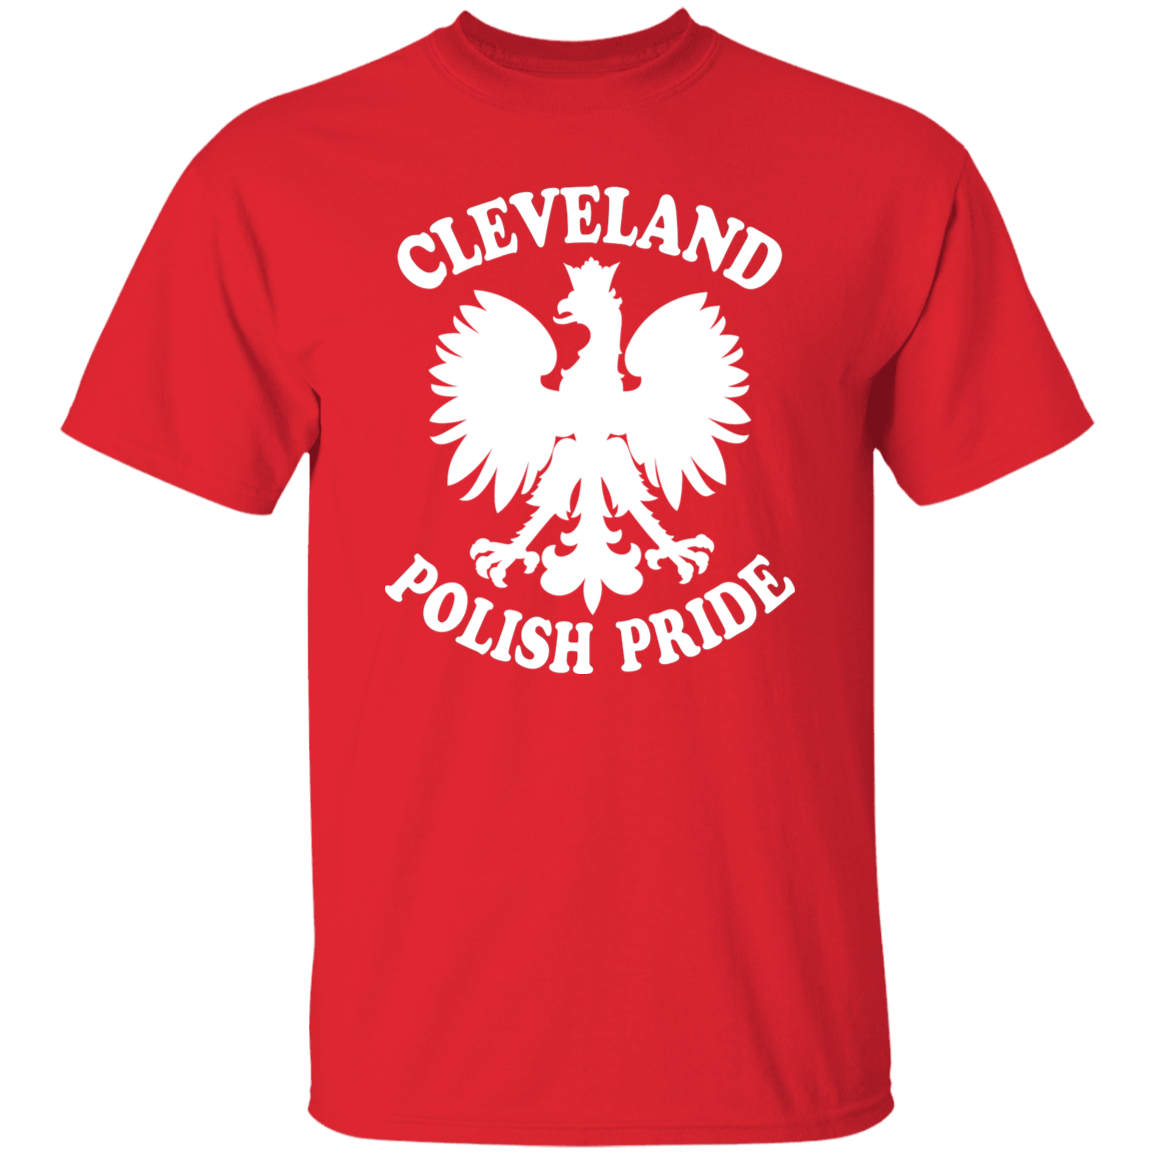 Cleveland Polish Pride Apparel CustomCat G500 5.3 oz. T-Shirt Red S